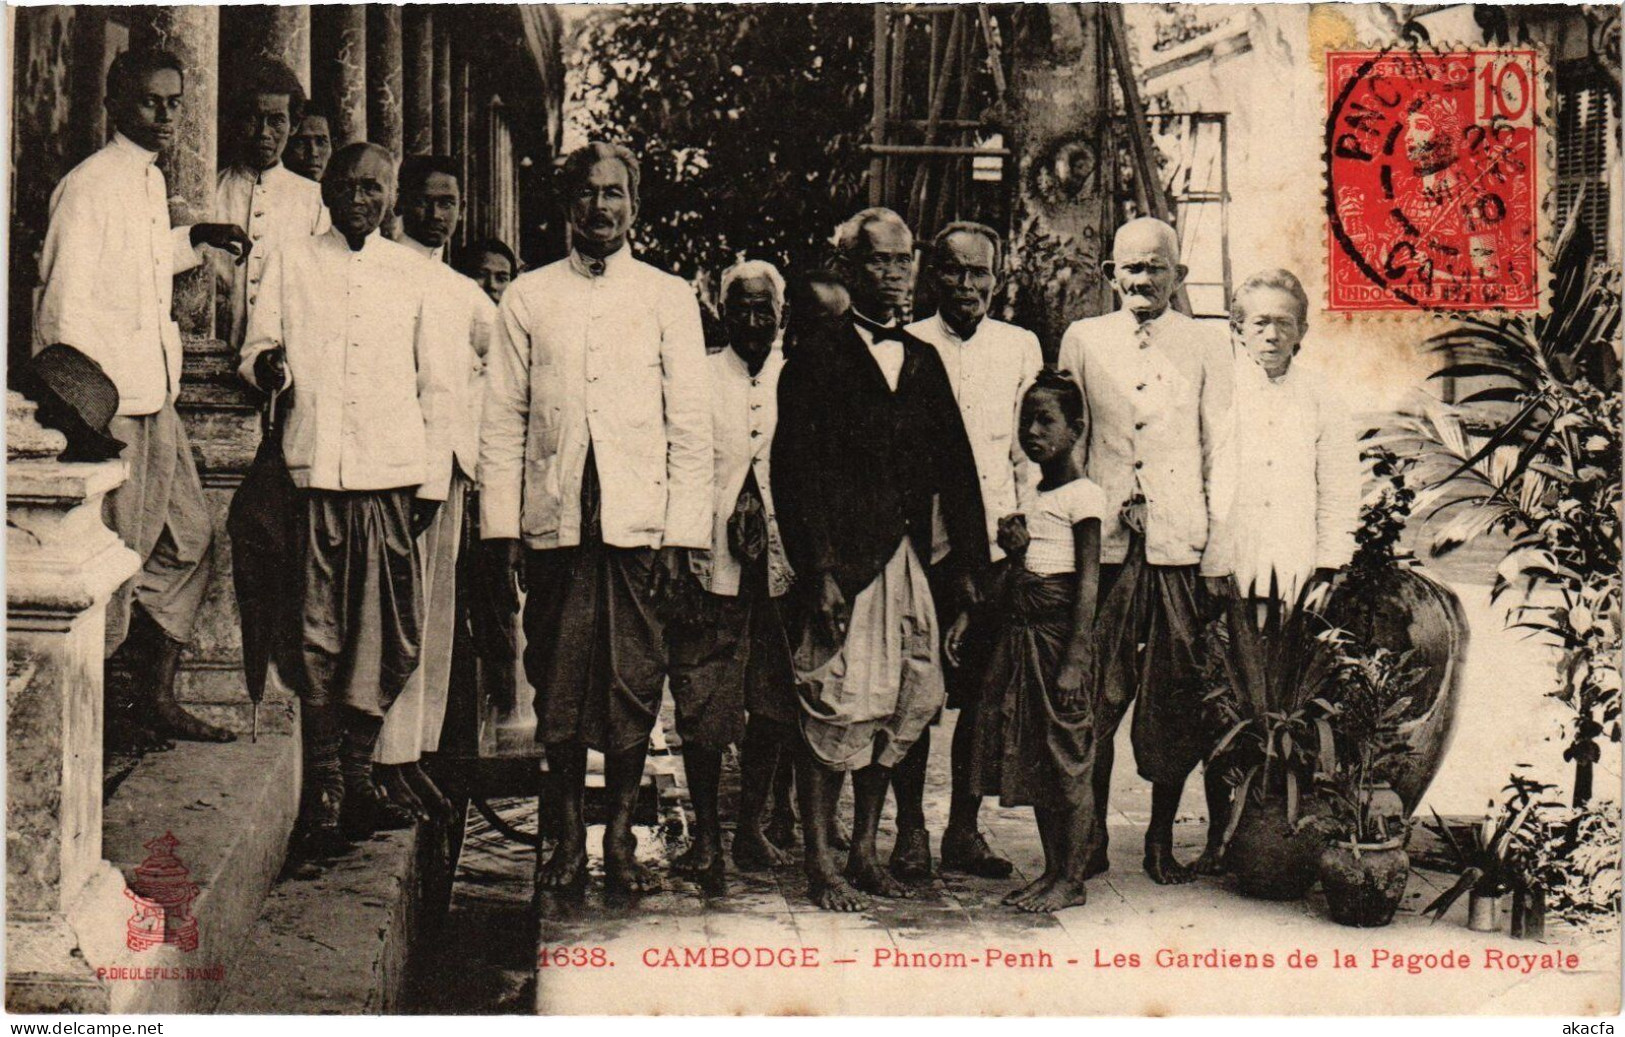 PC PHNOM-PENH LES GARDIENS DEL A PAGODE ROYALE CAMBODIA INDOCHINA (a37799) - Cambodge